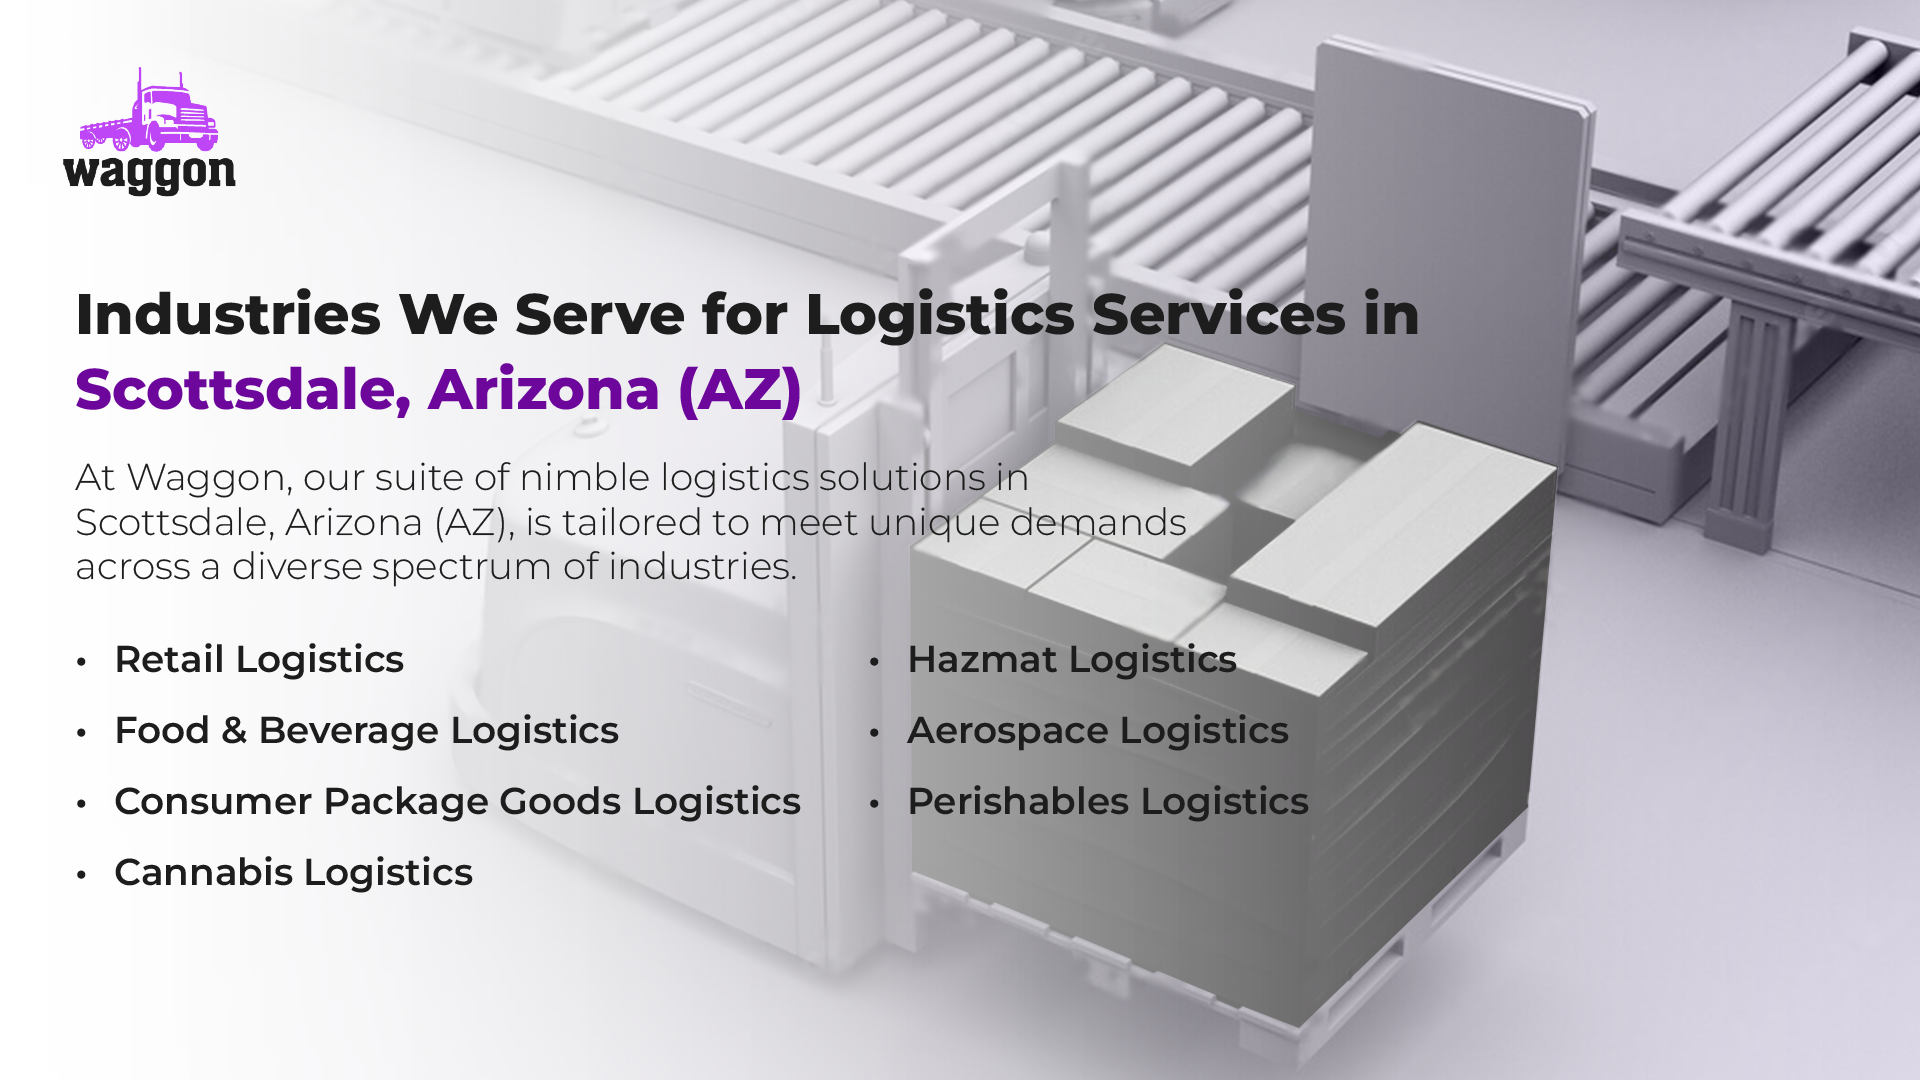 Industries We Serve for Logistics Services in Scottsdale, Arizona (AZ)